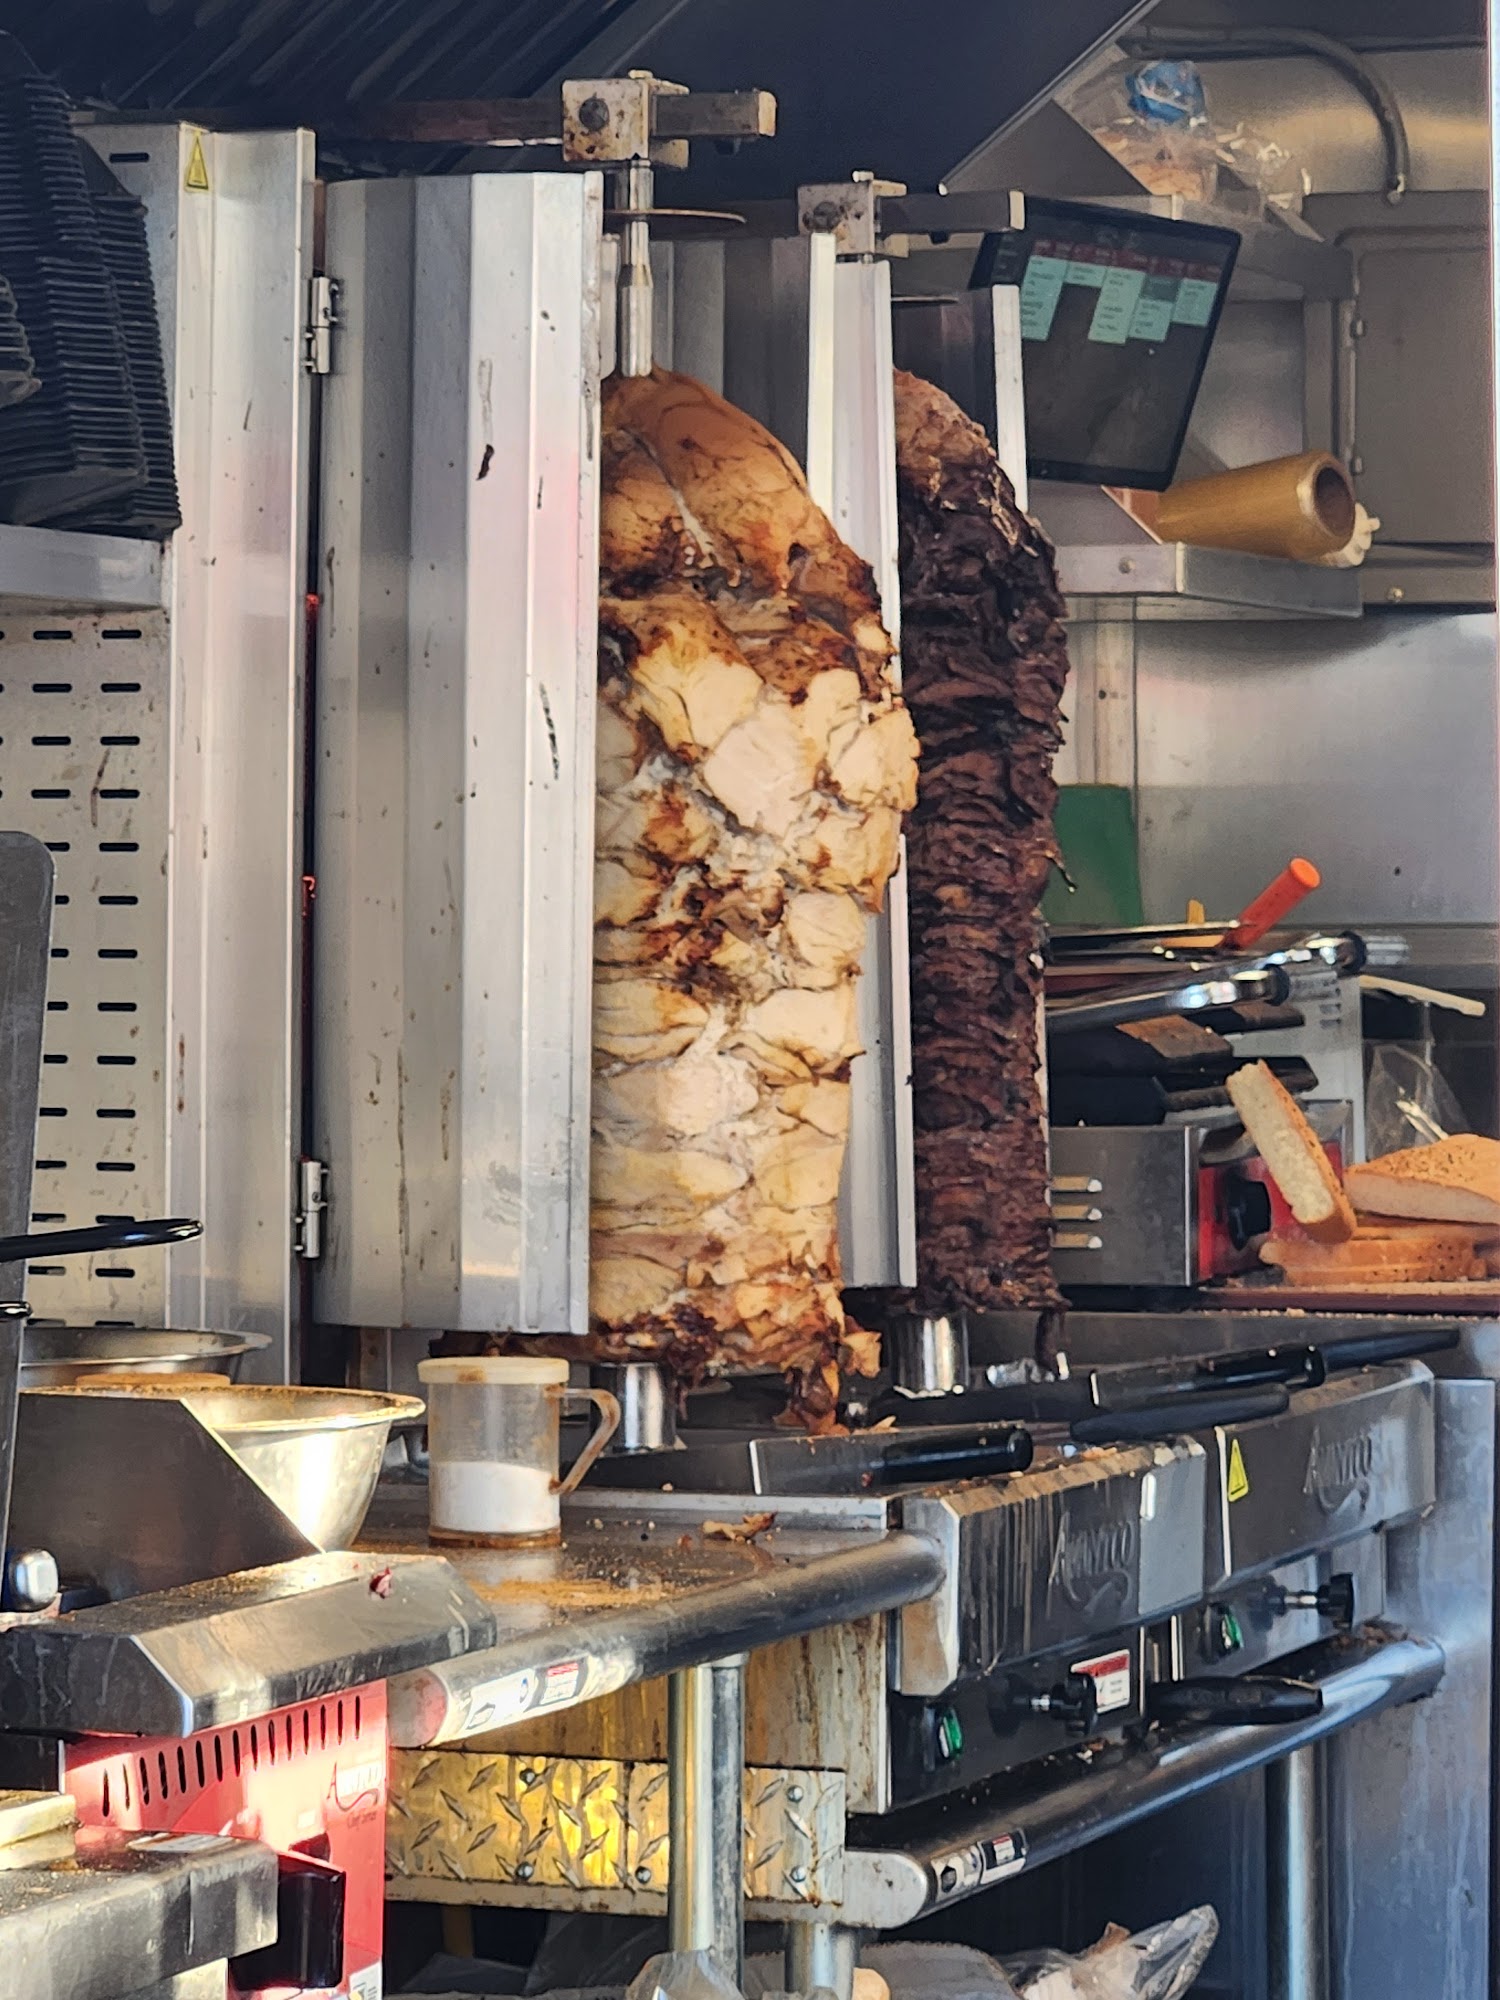 The Döner Shawarma